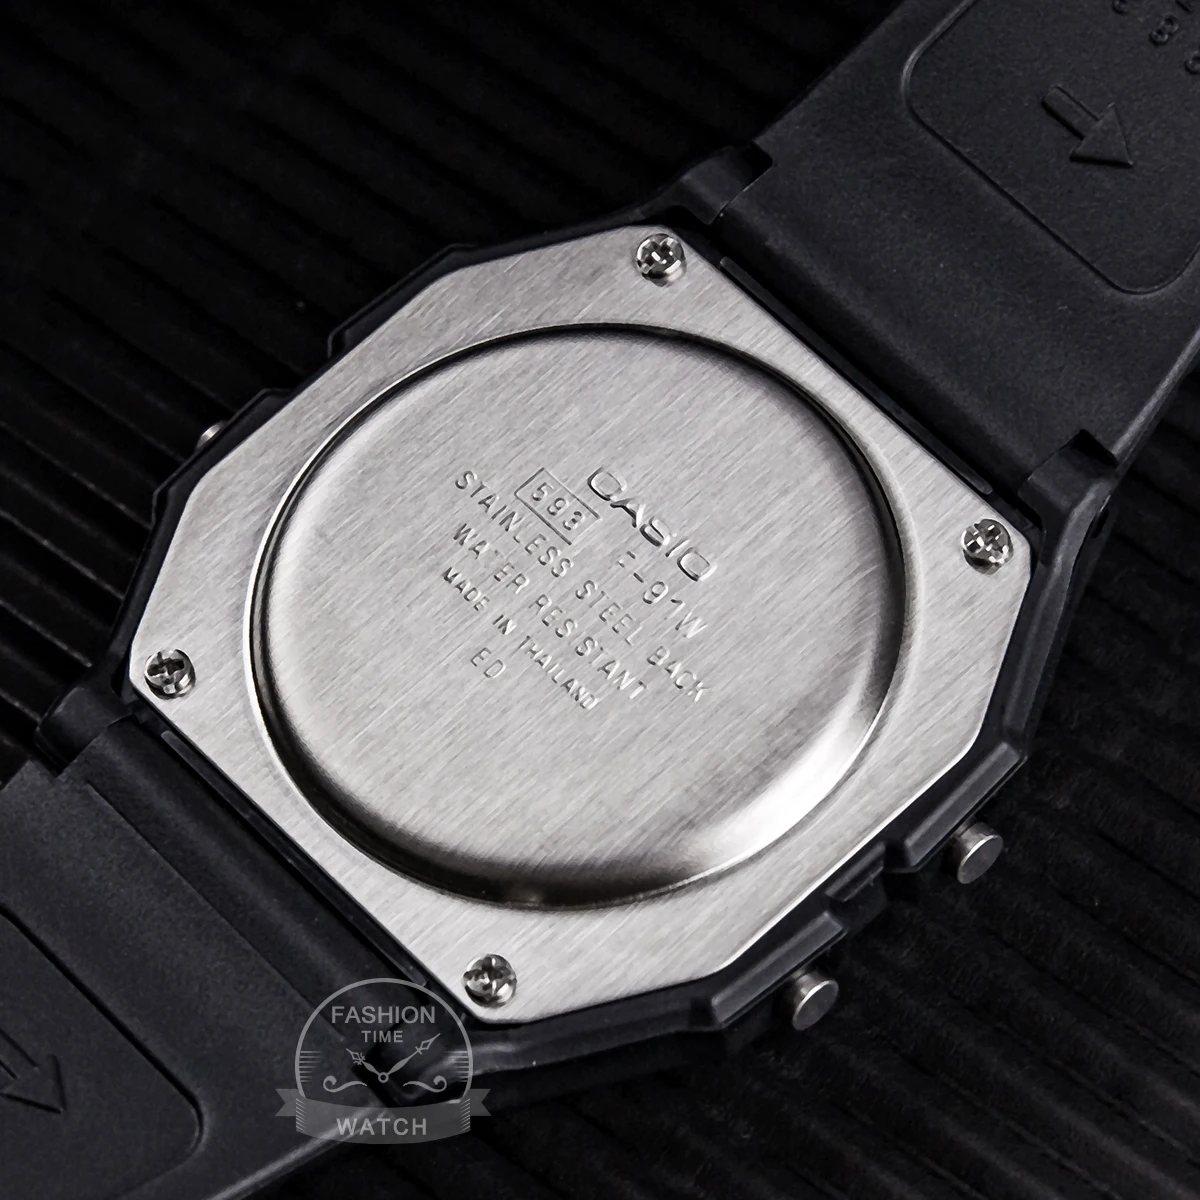 Casio watch men watch top luxur set military LED relogio digital watch sport Waterproof quartz men